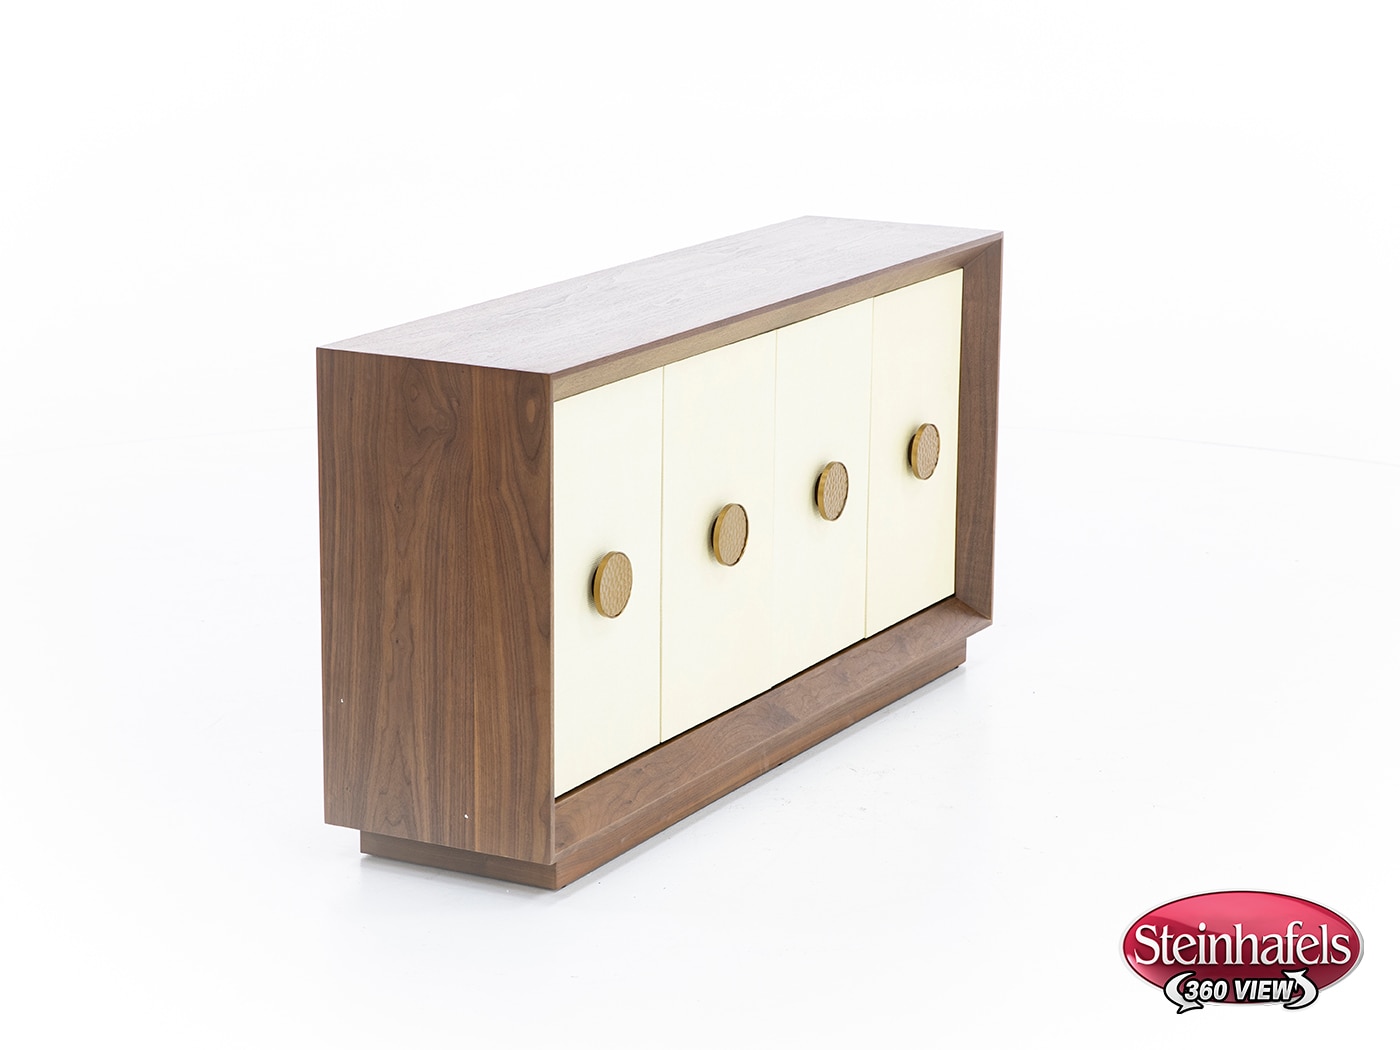 ctoc wood grain chests cabinets  image geo  